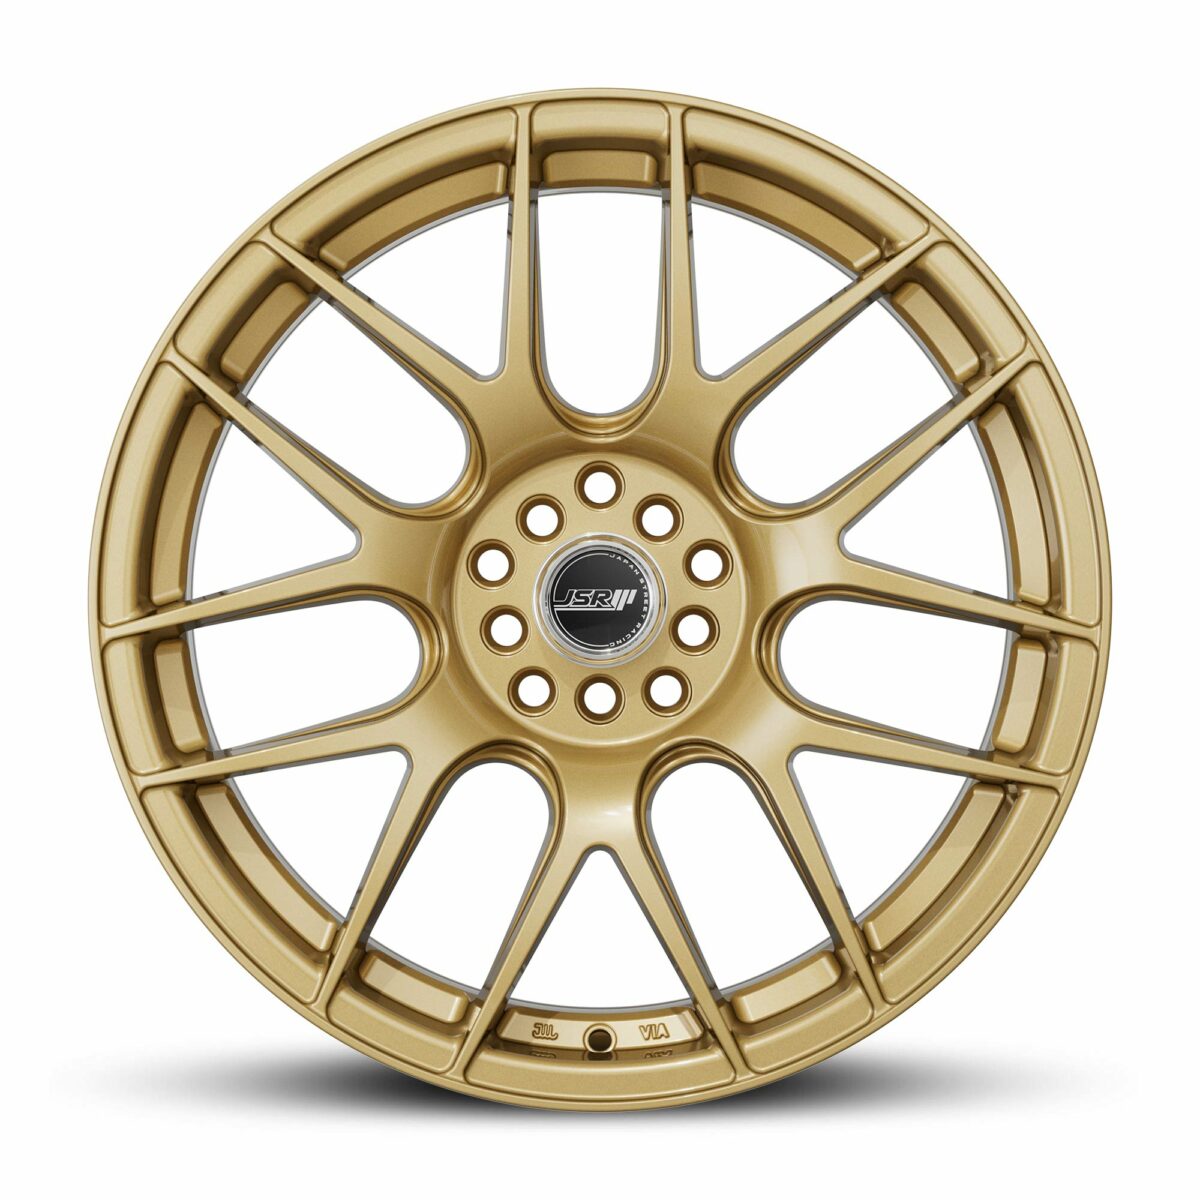 Japan Racing Wheels JSR ST26 Gloss Gold JDM Rims 17 18 19 Inch Alloys